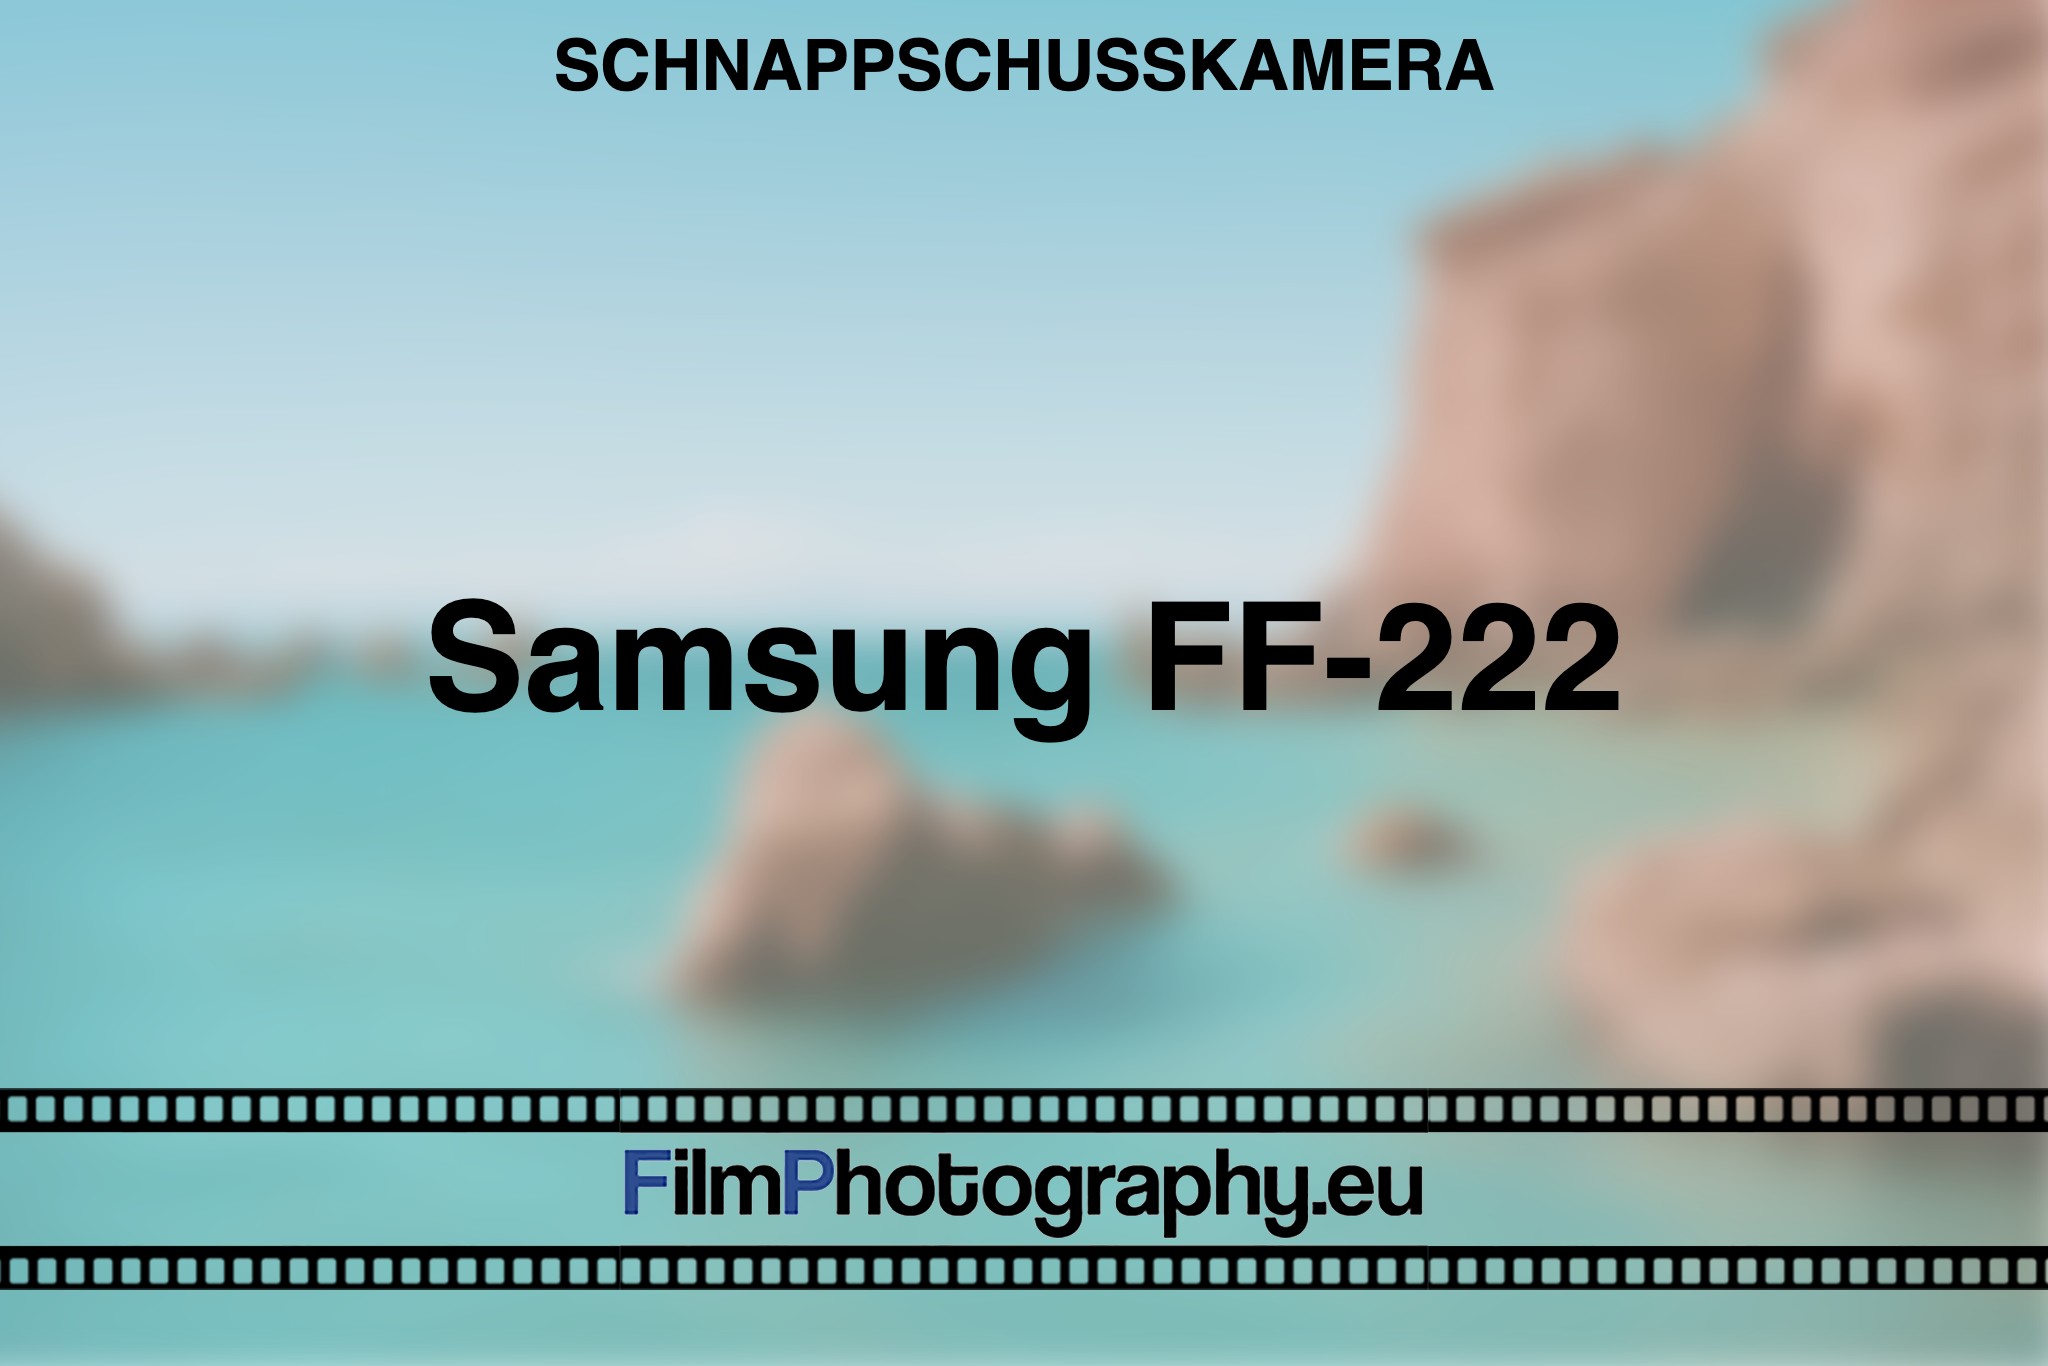 samsung-ff-222-schnappschusskamera-bnv